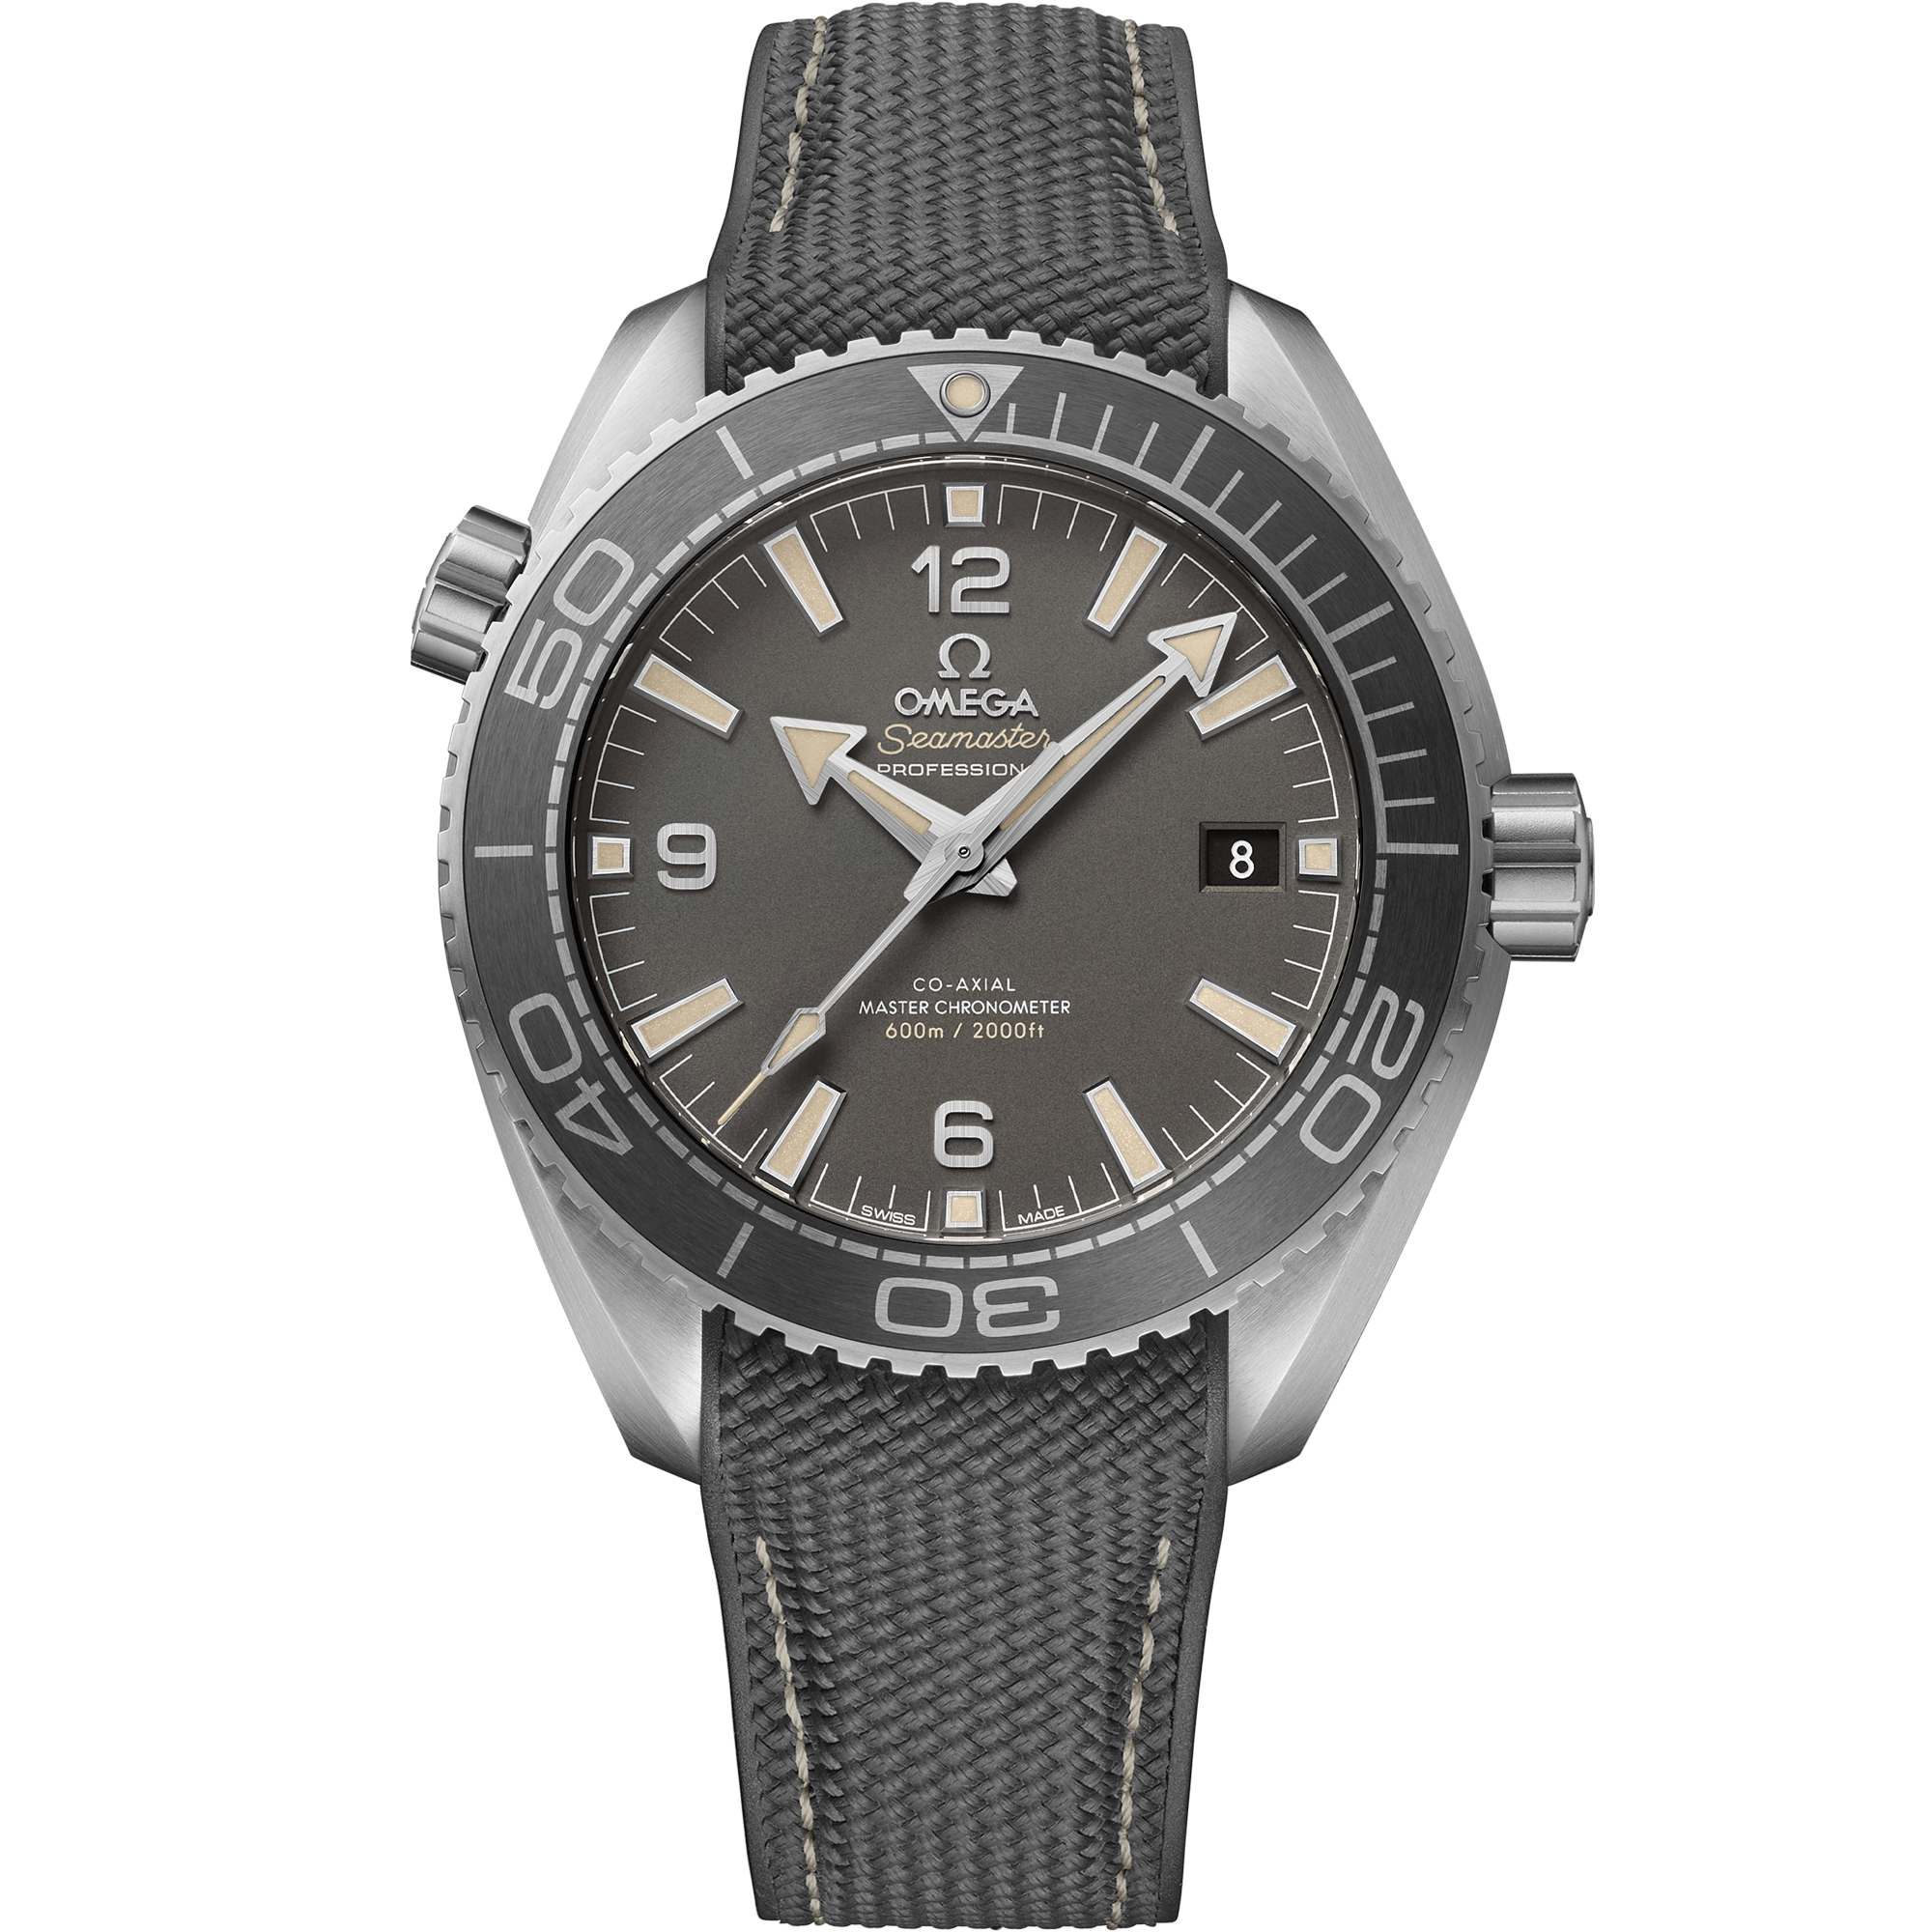 Planet Ocean 600M Seamaster Steel Chronometer Watch 215.32.44.21.01.001 |  OMEGA US®